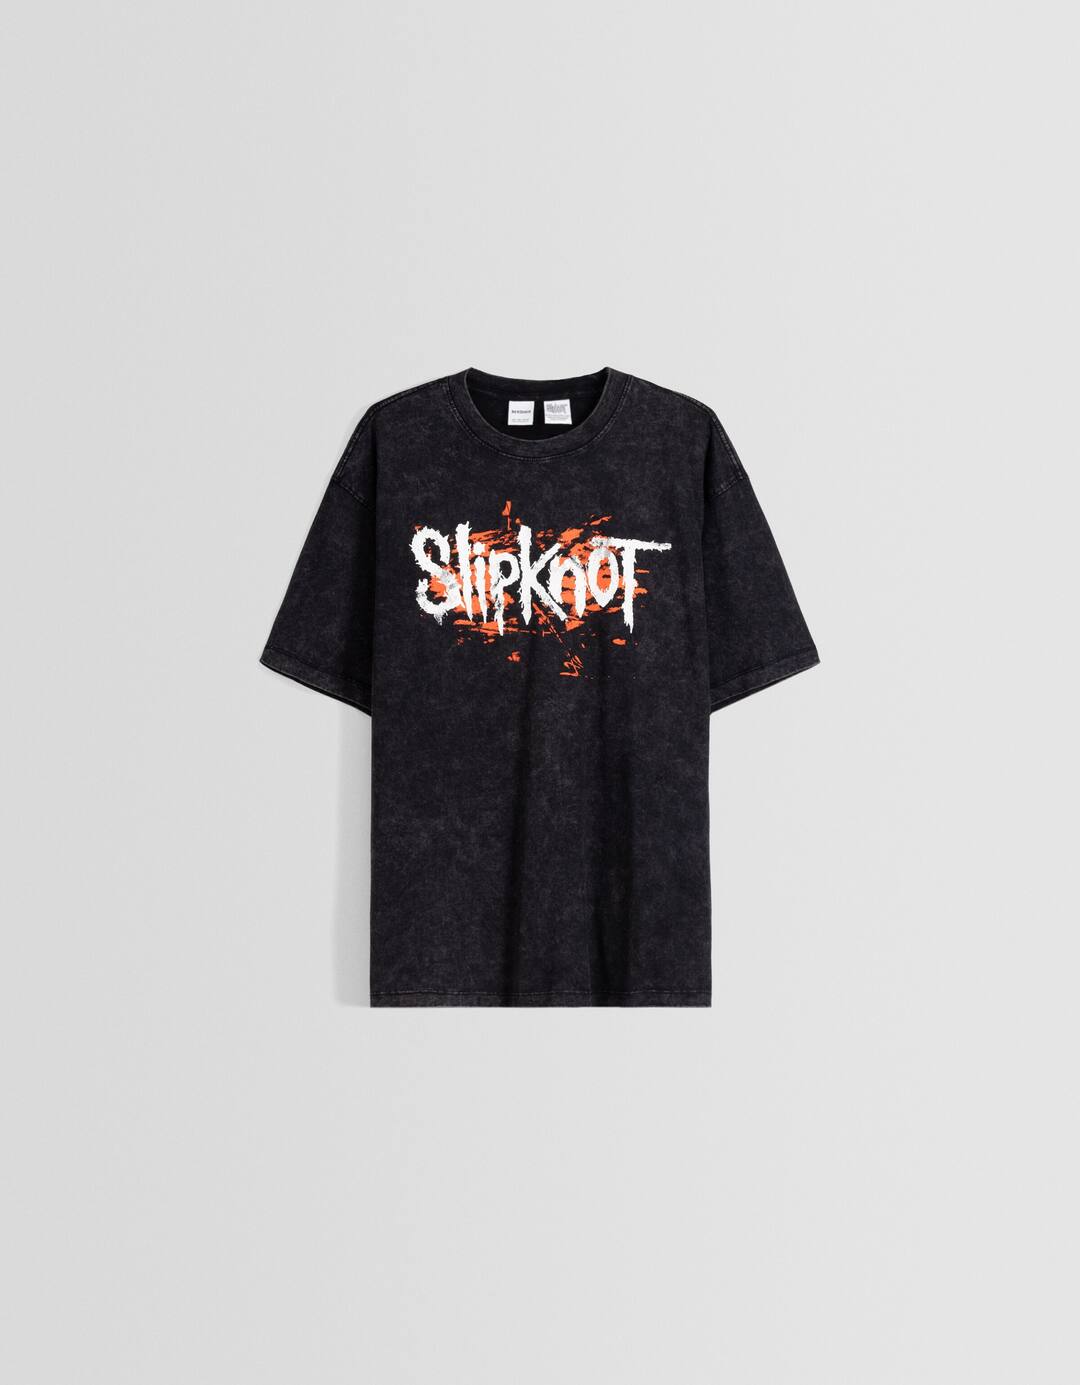 Kaus gambar Slipknot dengan lengan pendek dan boxy fit